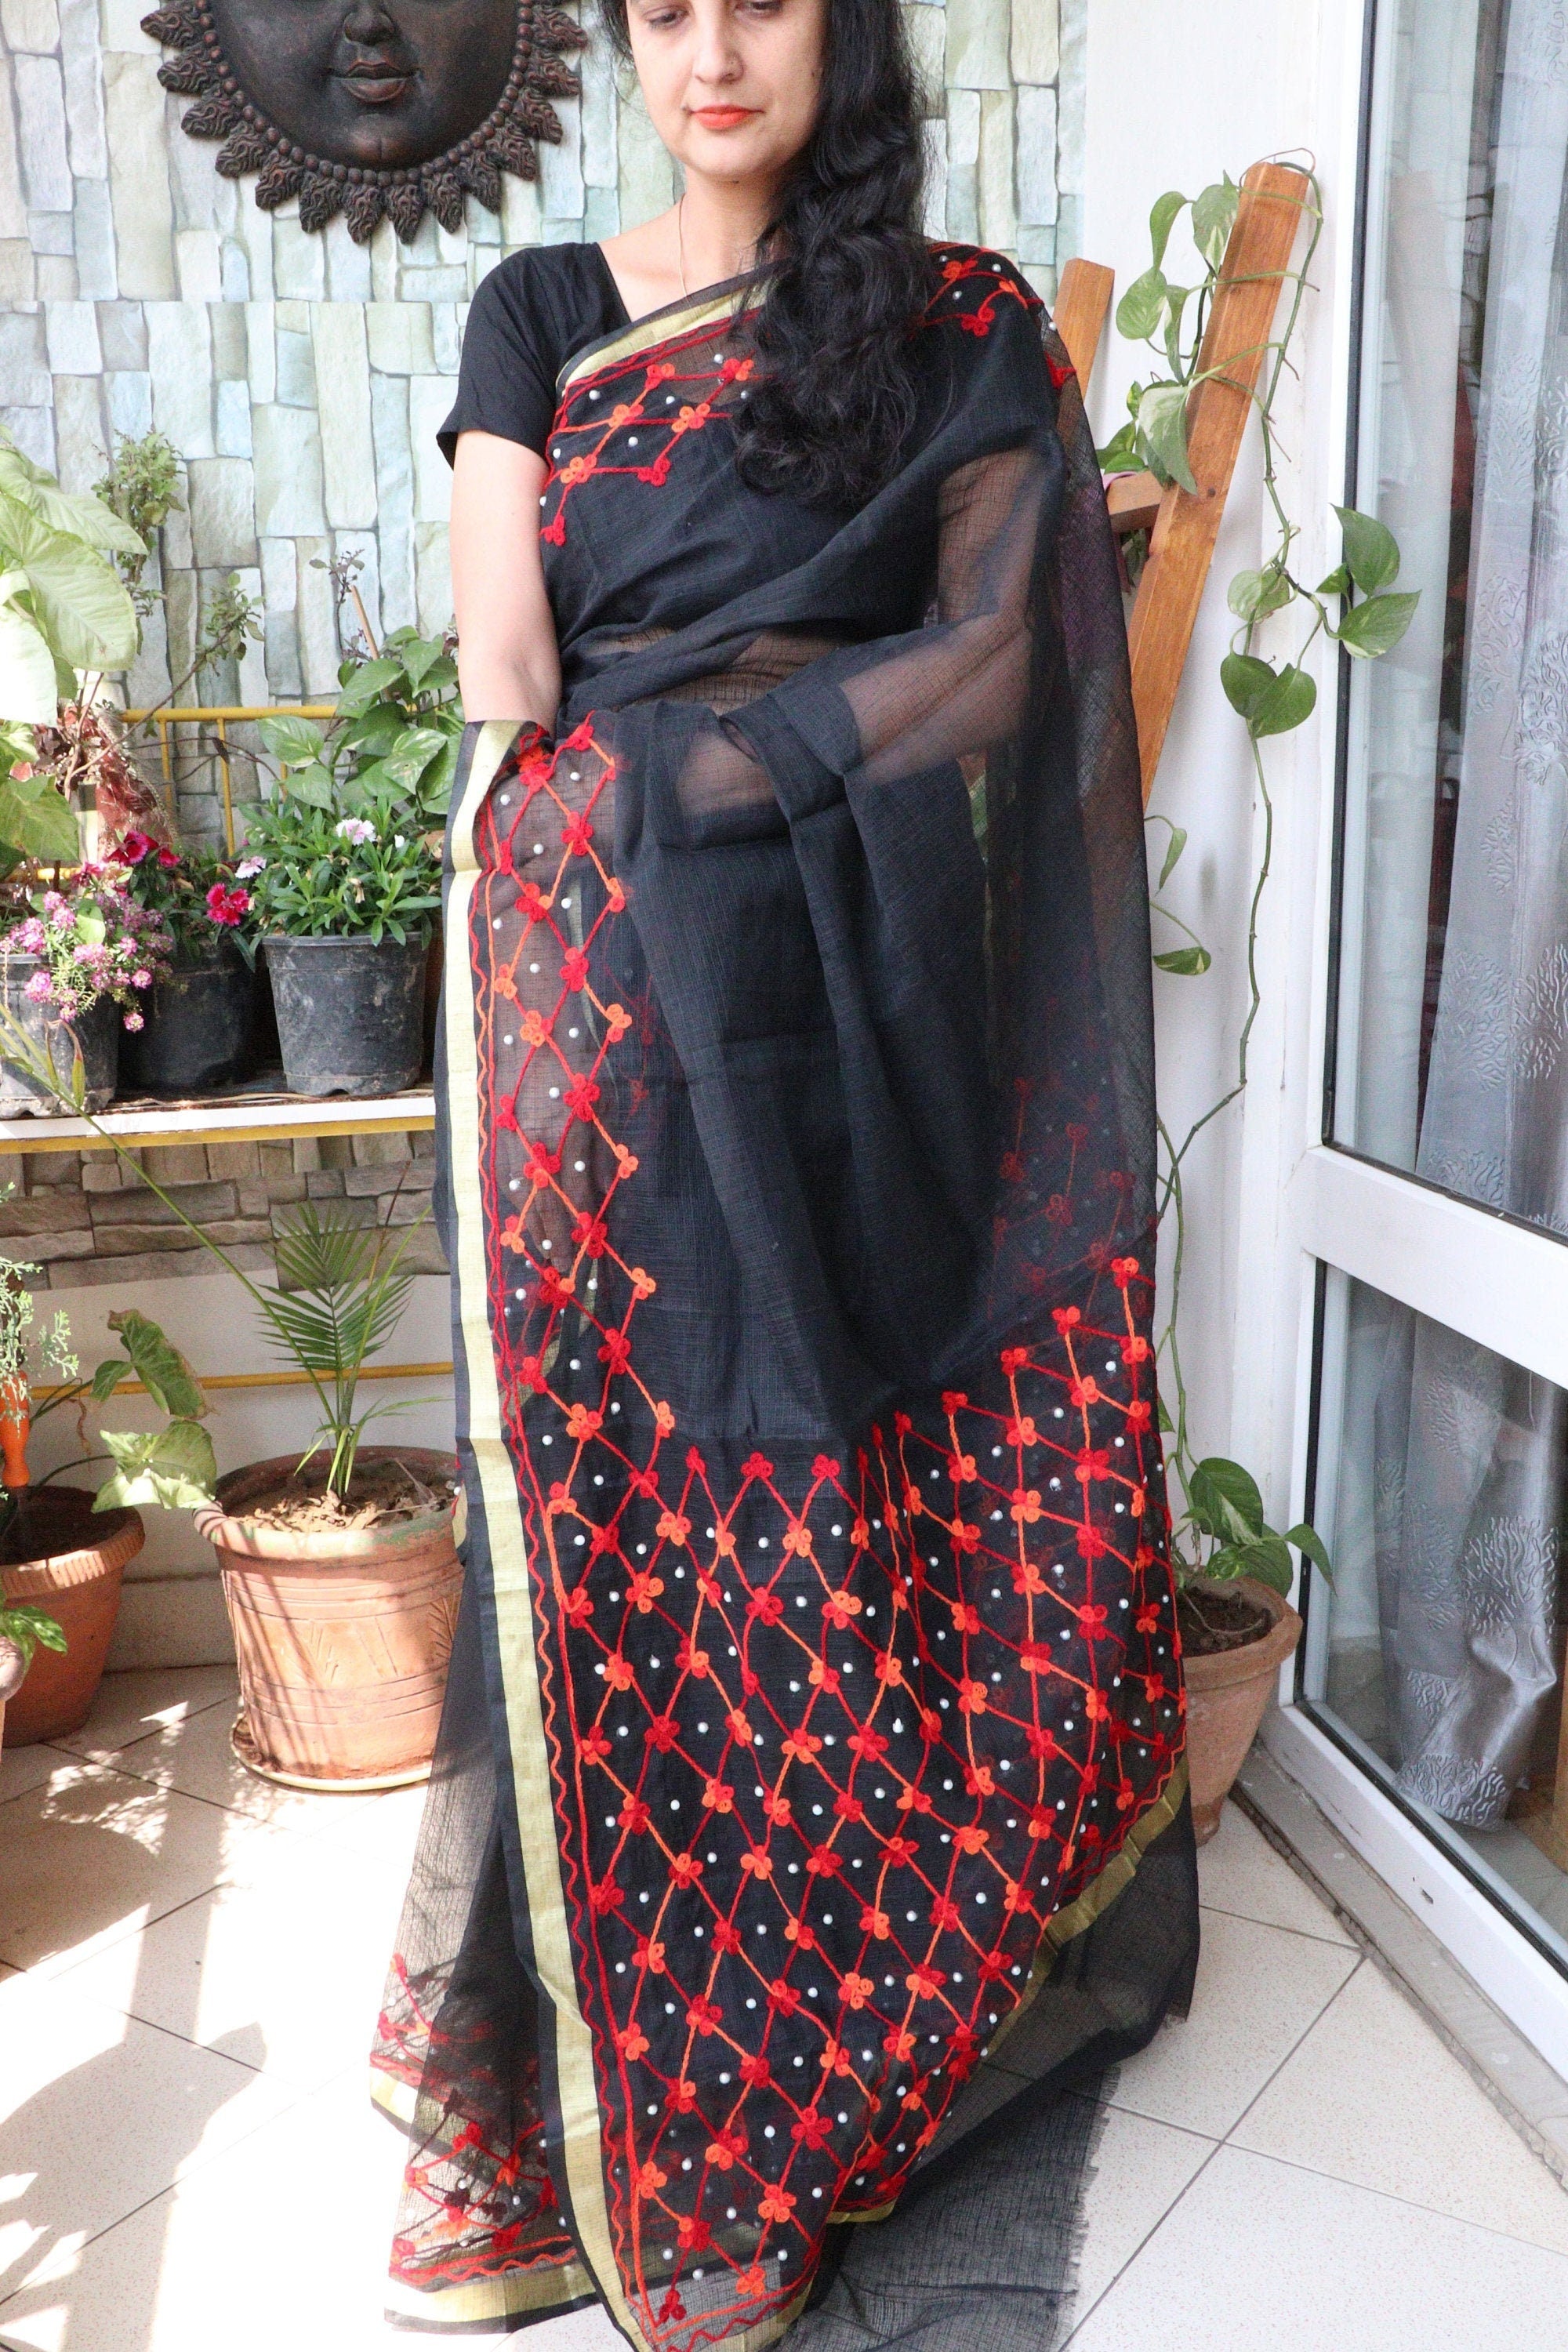 Saree - Cotton Kota Doriya - Handloom/Handwoven Saree with Wool Embroidery - Black Beauty - Sari/Indian Dress/Fabric Yard